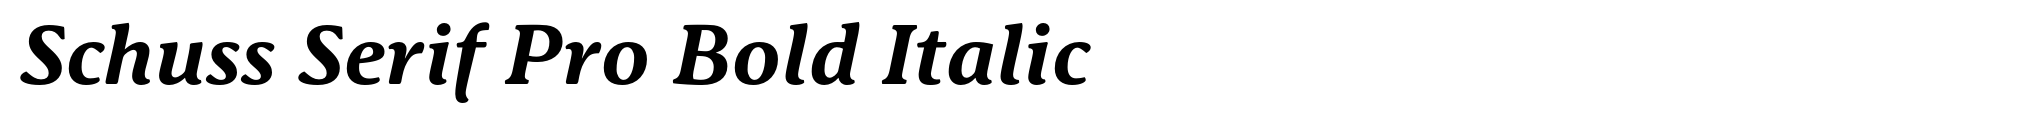 Schuss Serif Pro Bold Italic image